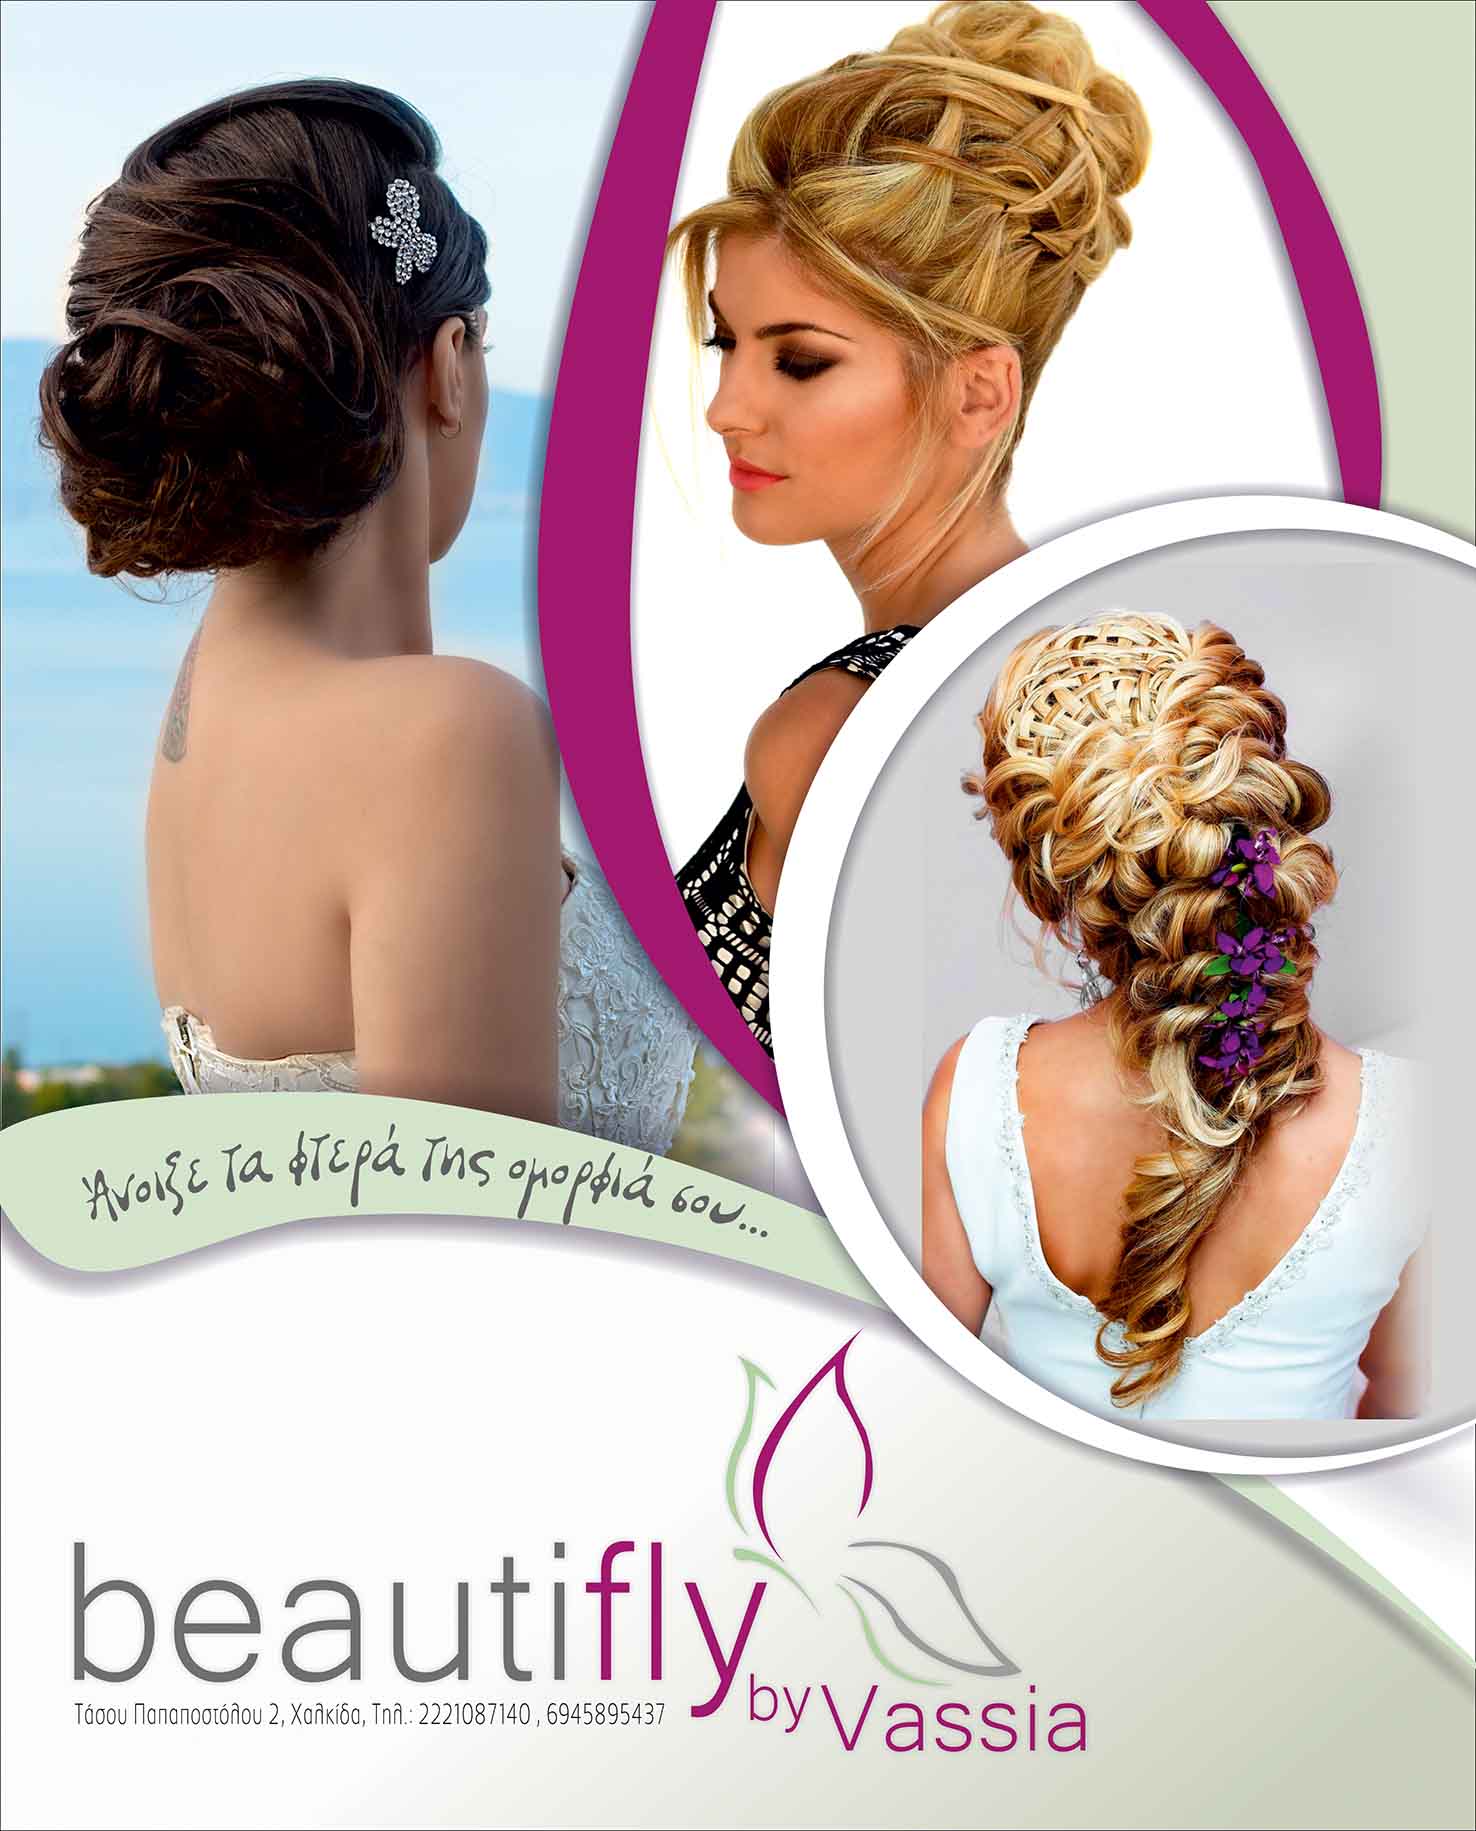 Beautify by vassia - Vassia Georgoulia, Hair styling